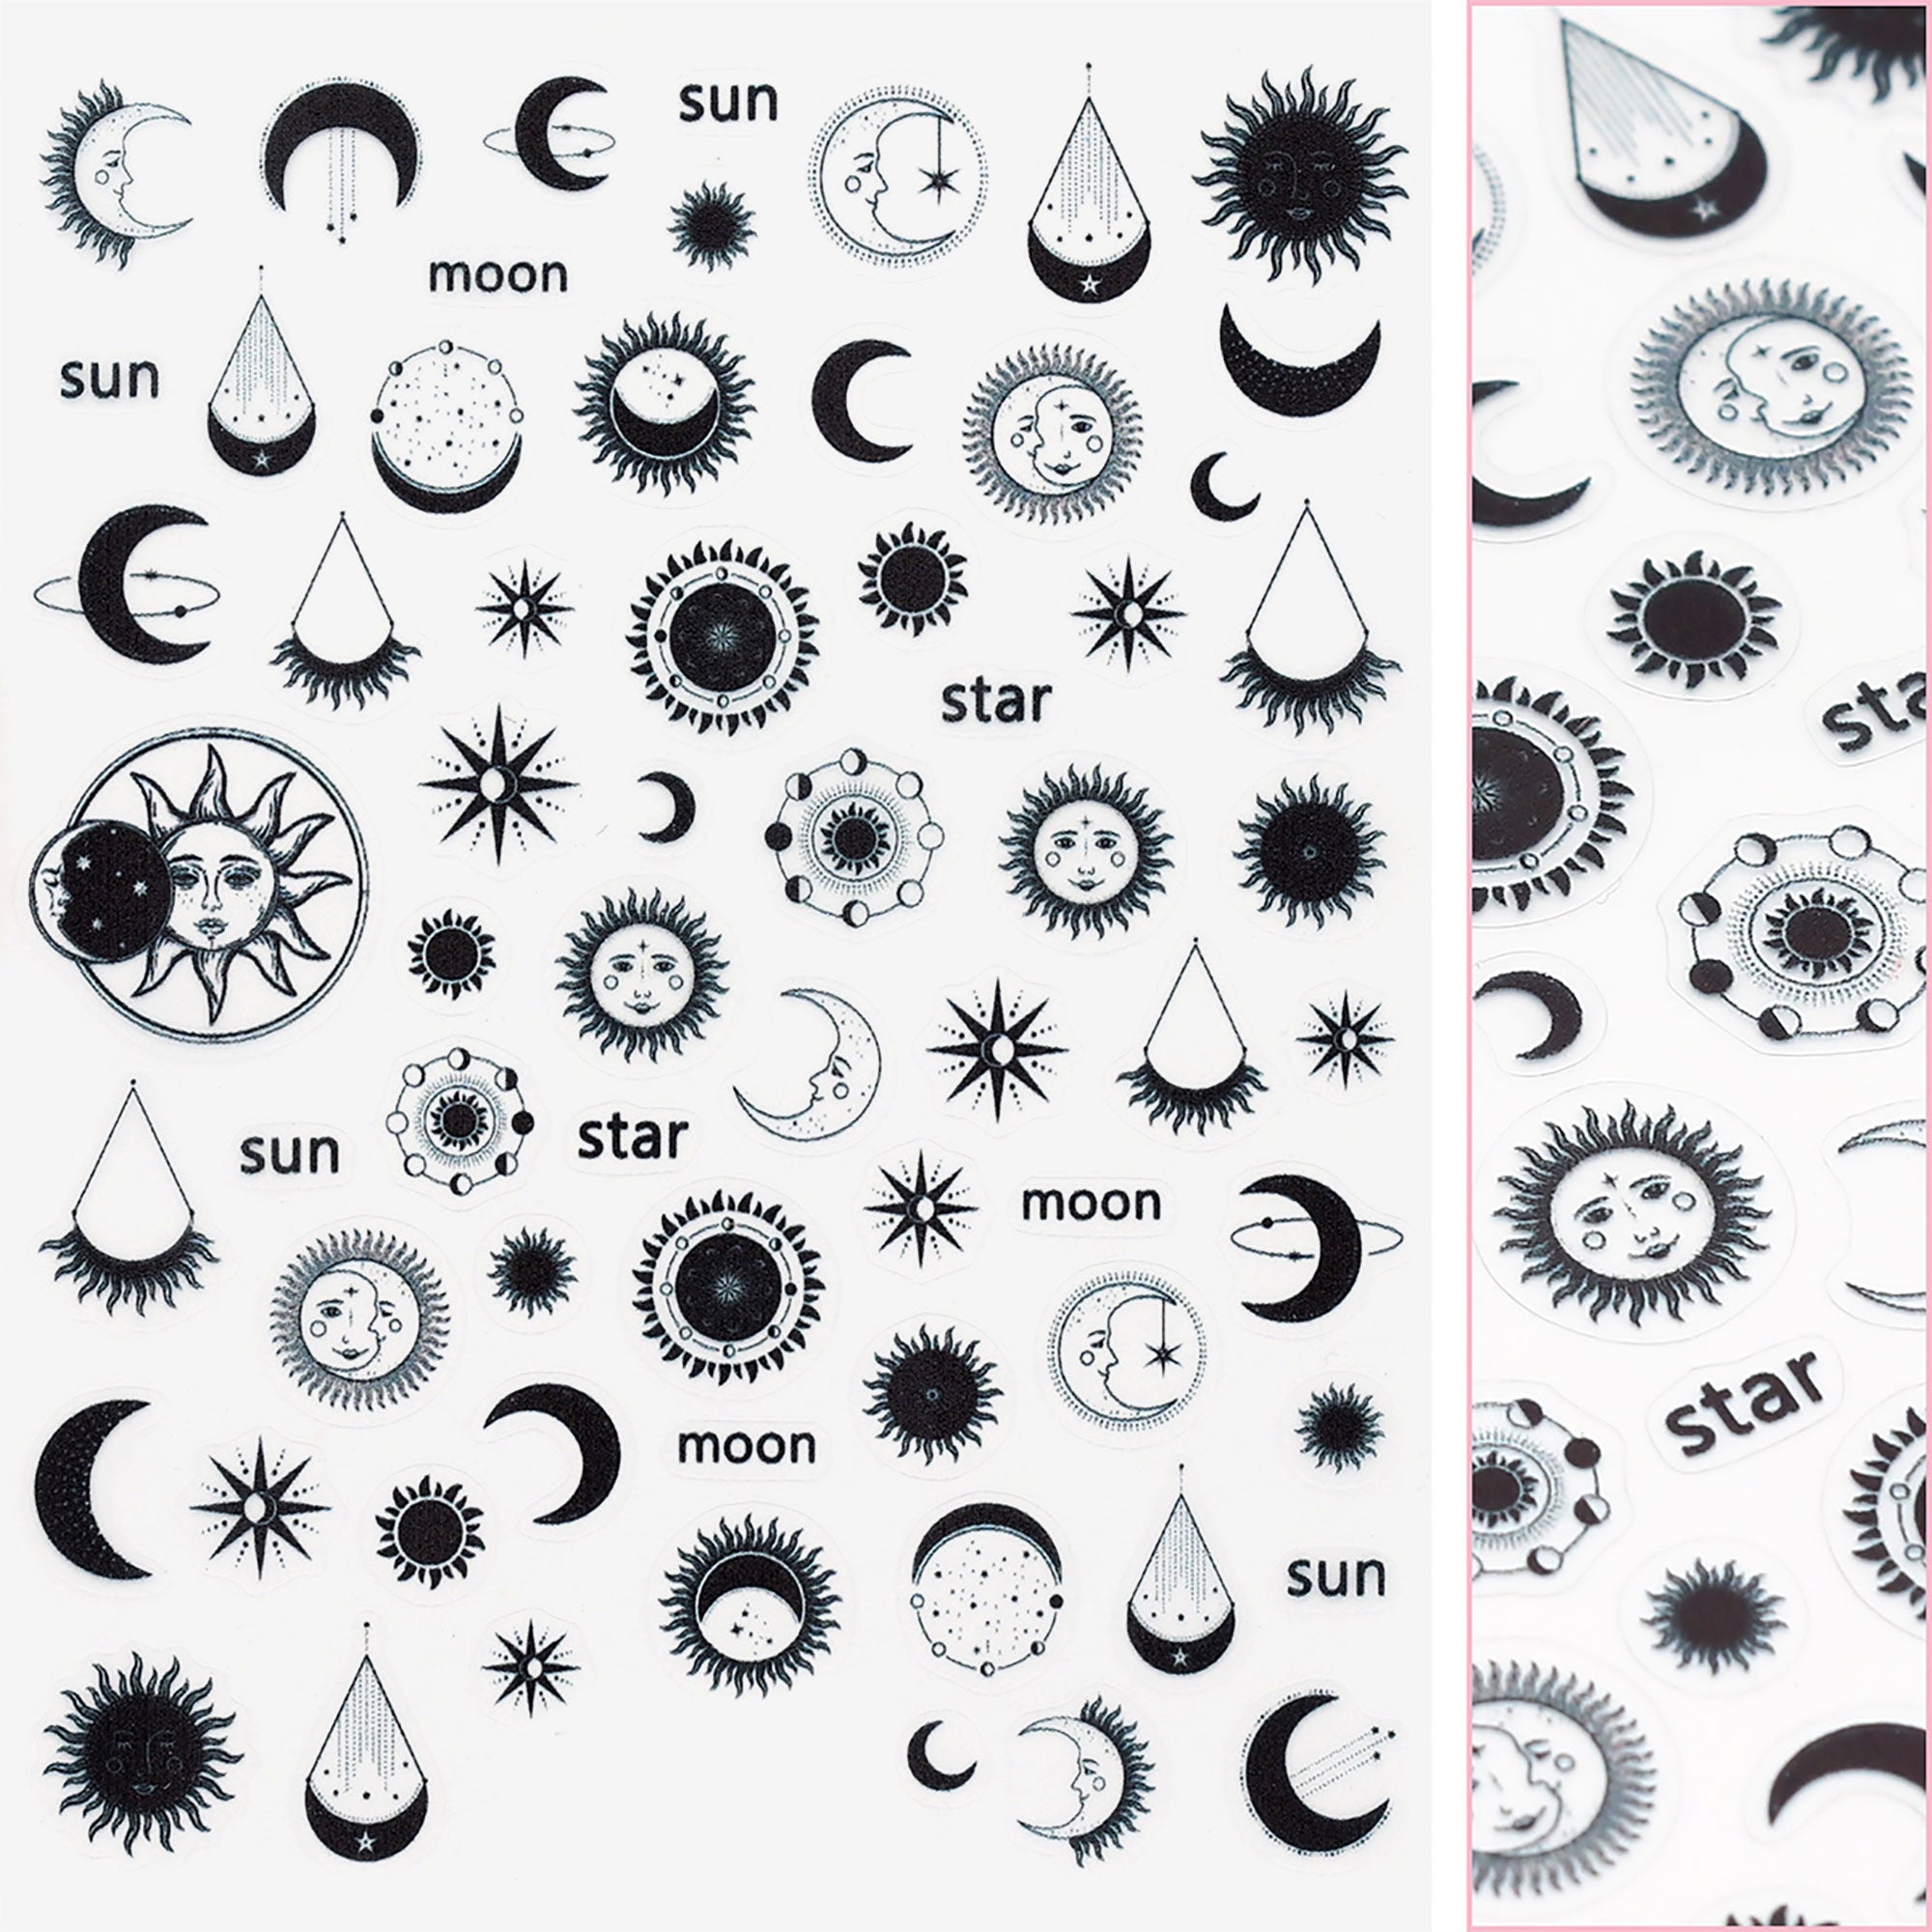 Chic Nail Art Sticker / Celestial Magic / Black Moon Sun Design Trendy Mystical